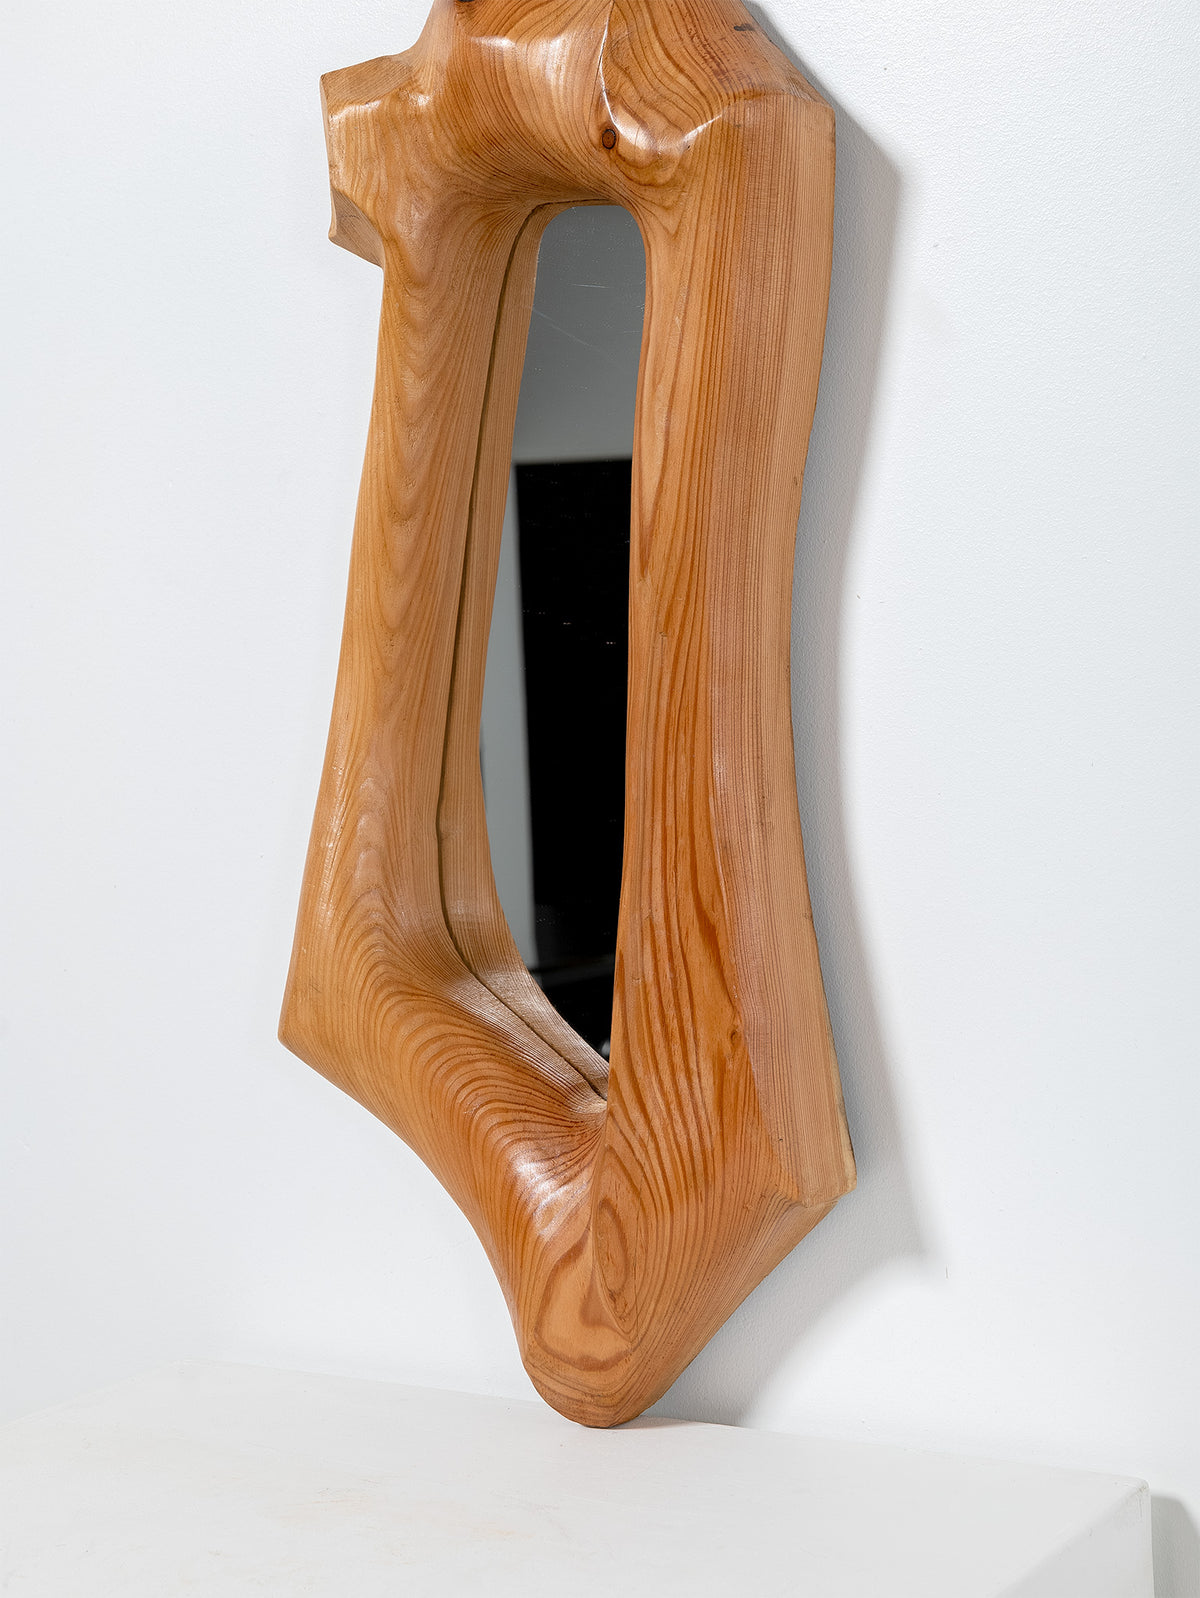 Organic Timber Mirror 2